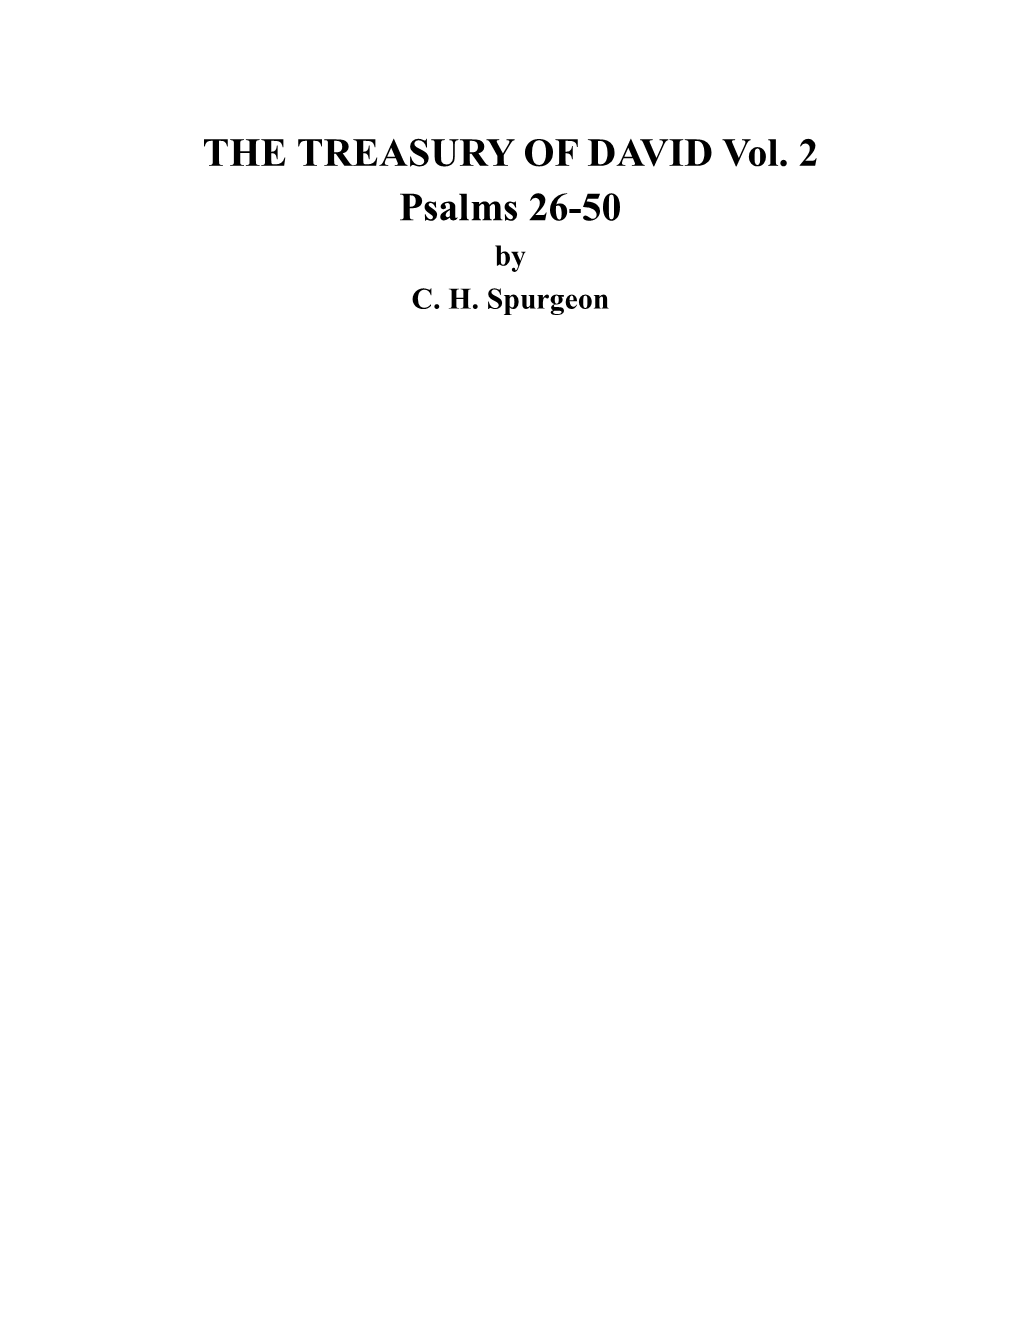 THE TREASURY of DAVID Vol. 2 Psalms 26-50 by C